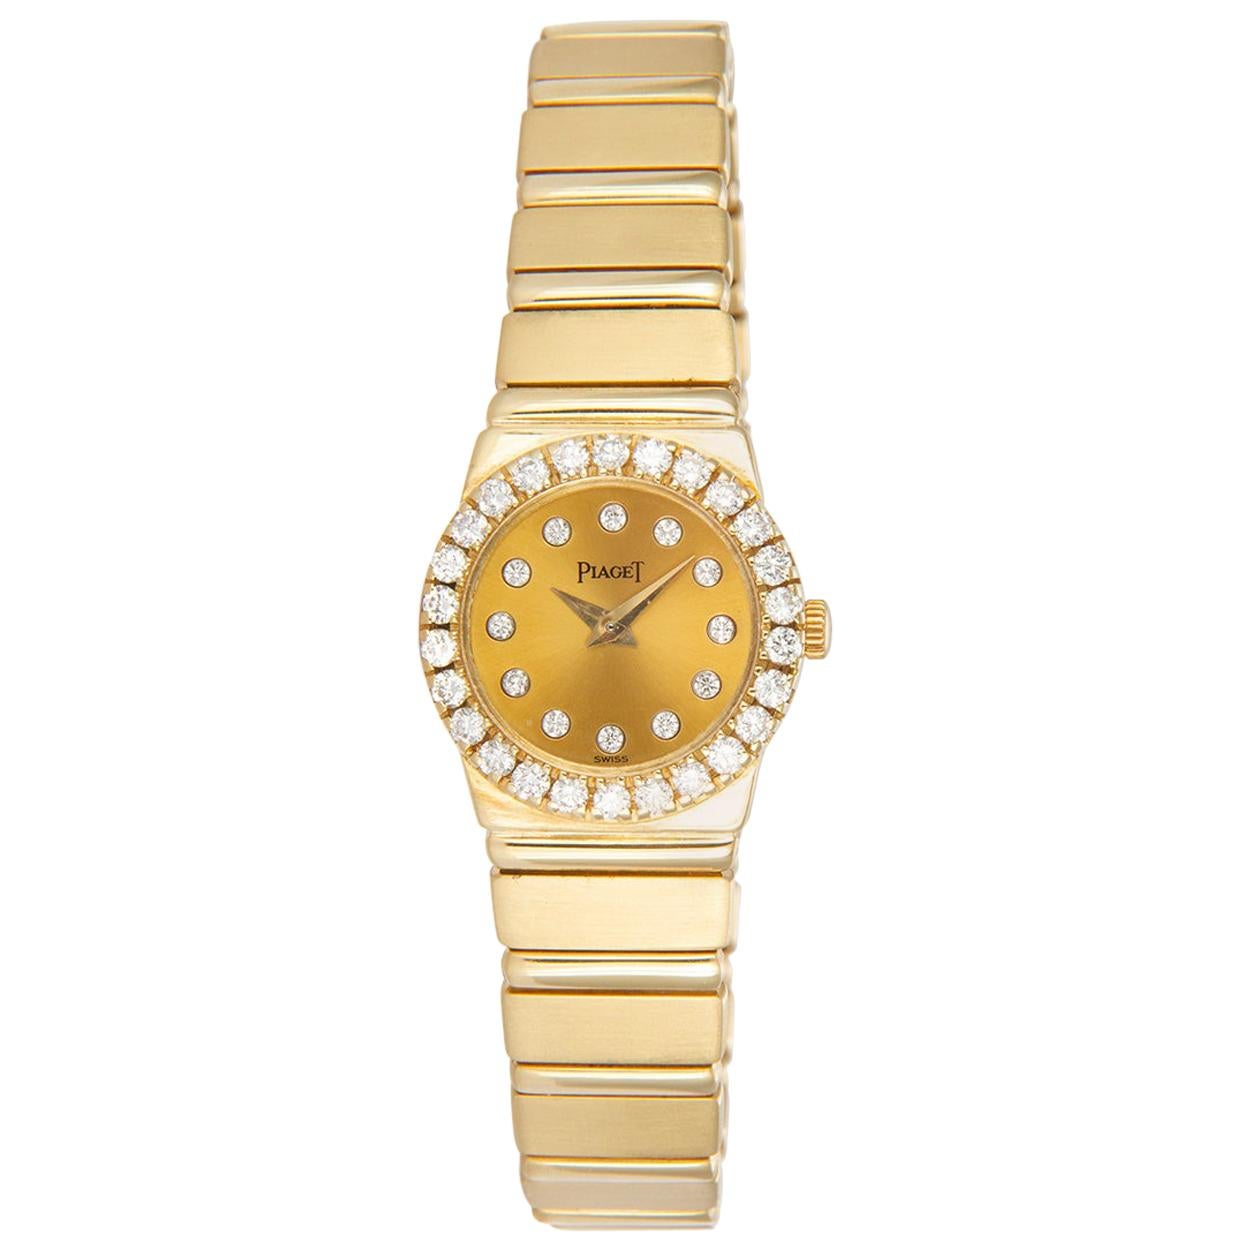 Piaget Polo 18 Karat Yellow Gold Diamond Ladies Watch 8296 C with Box